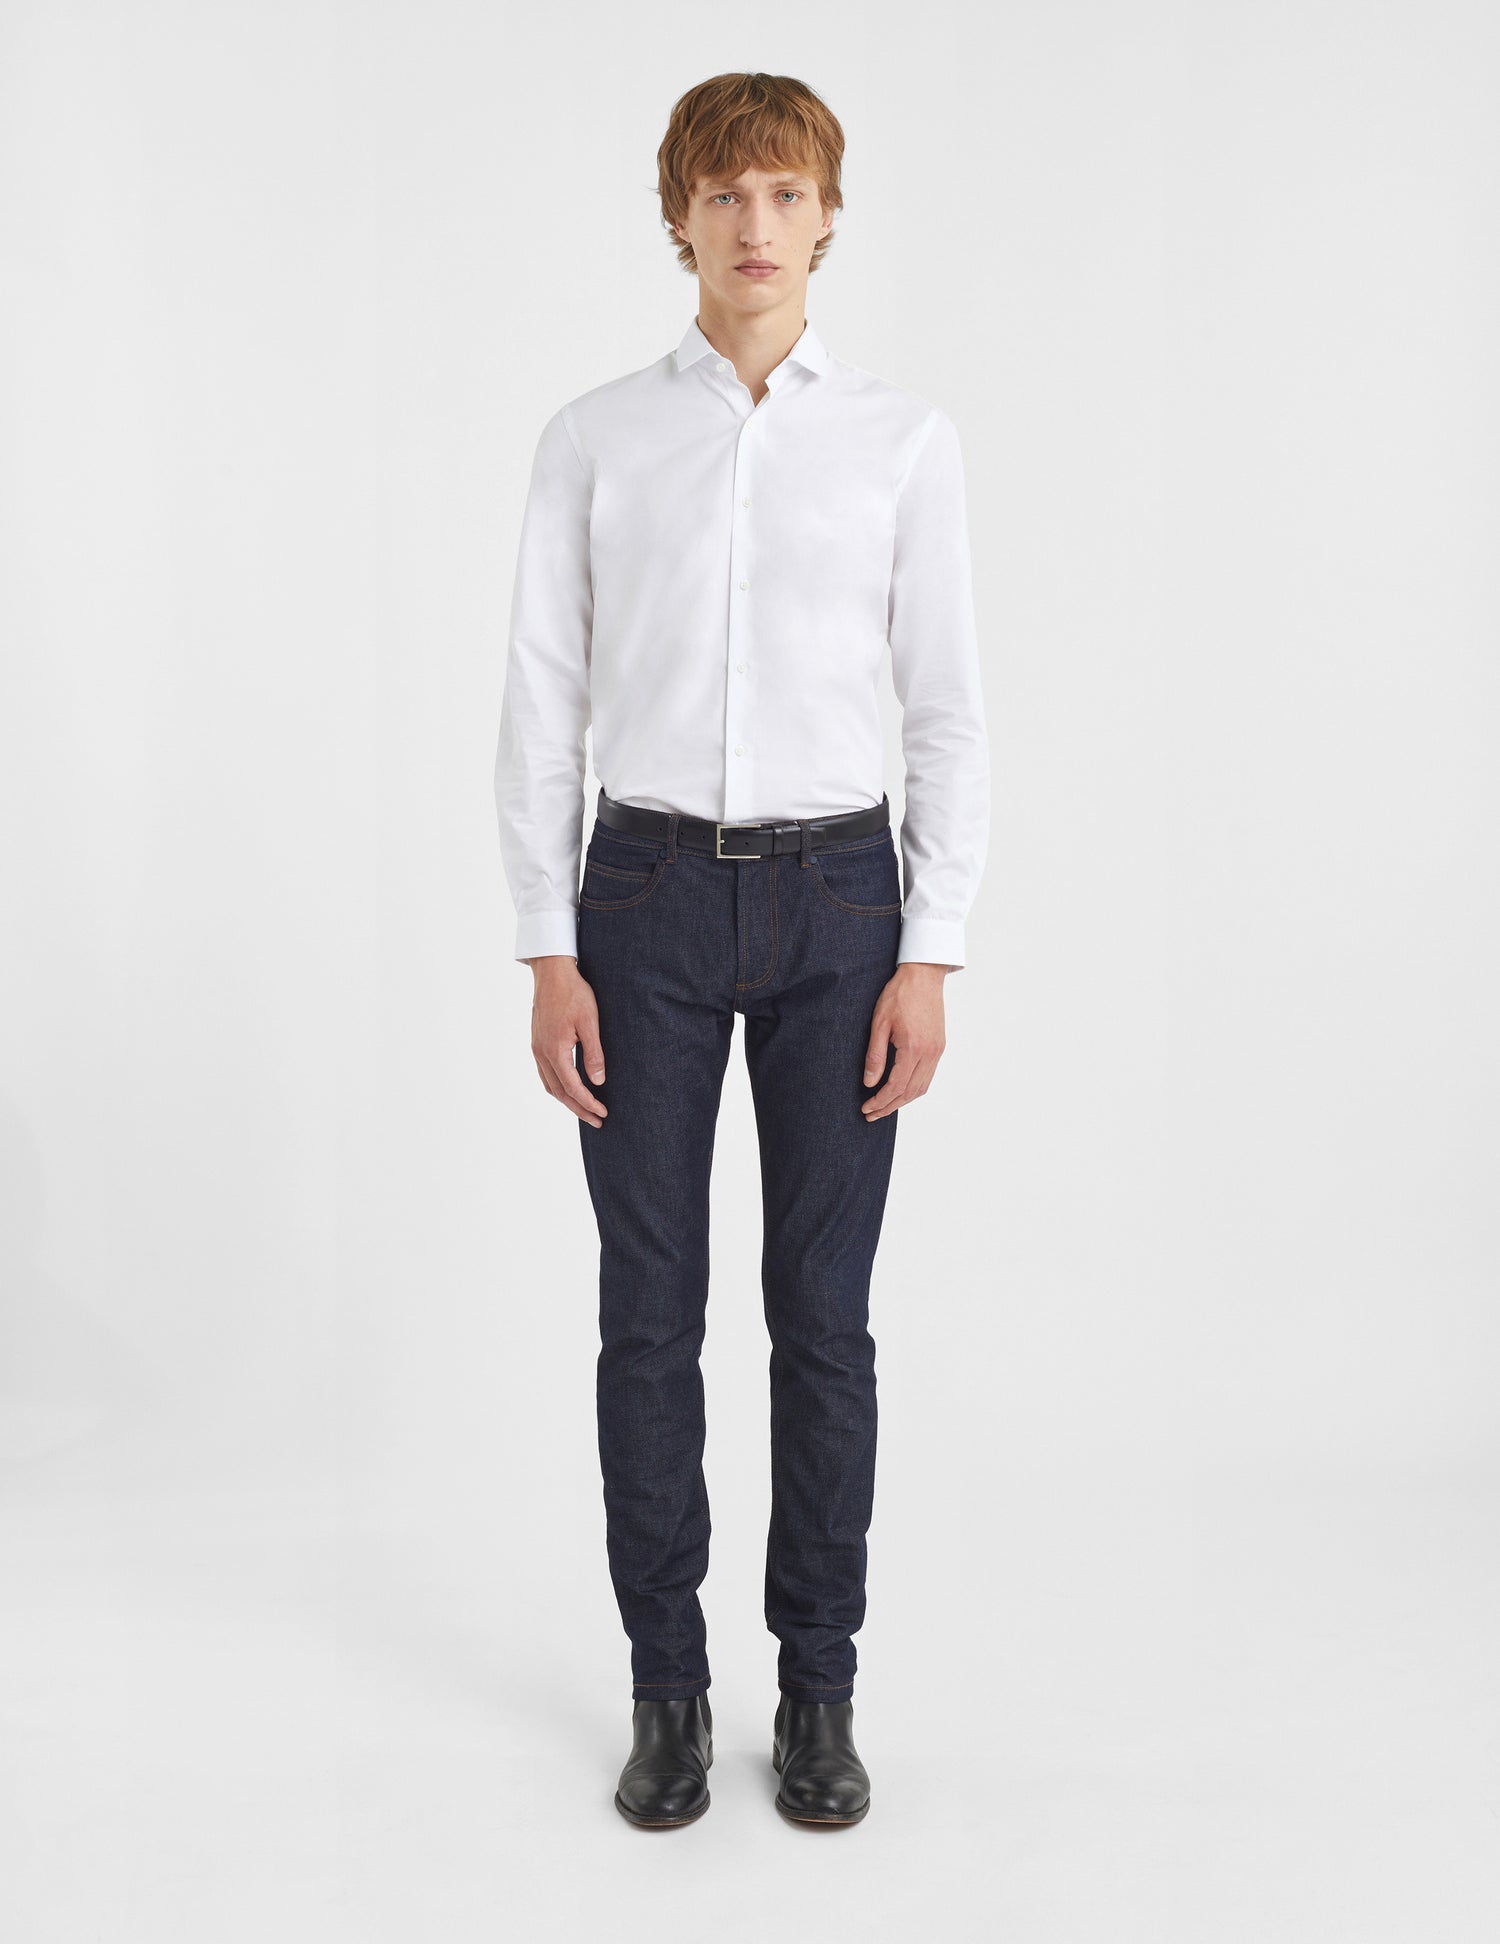 Fitted white shirt - Poplin - Thin Collar#5